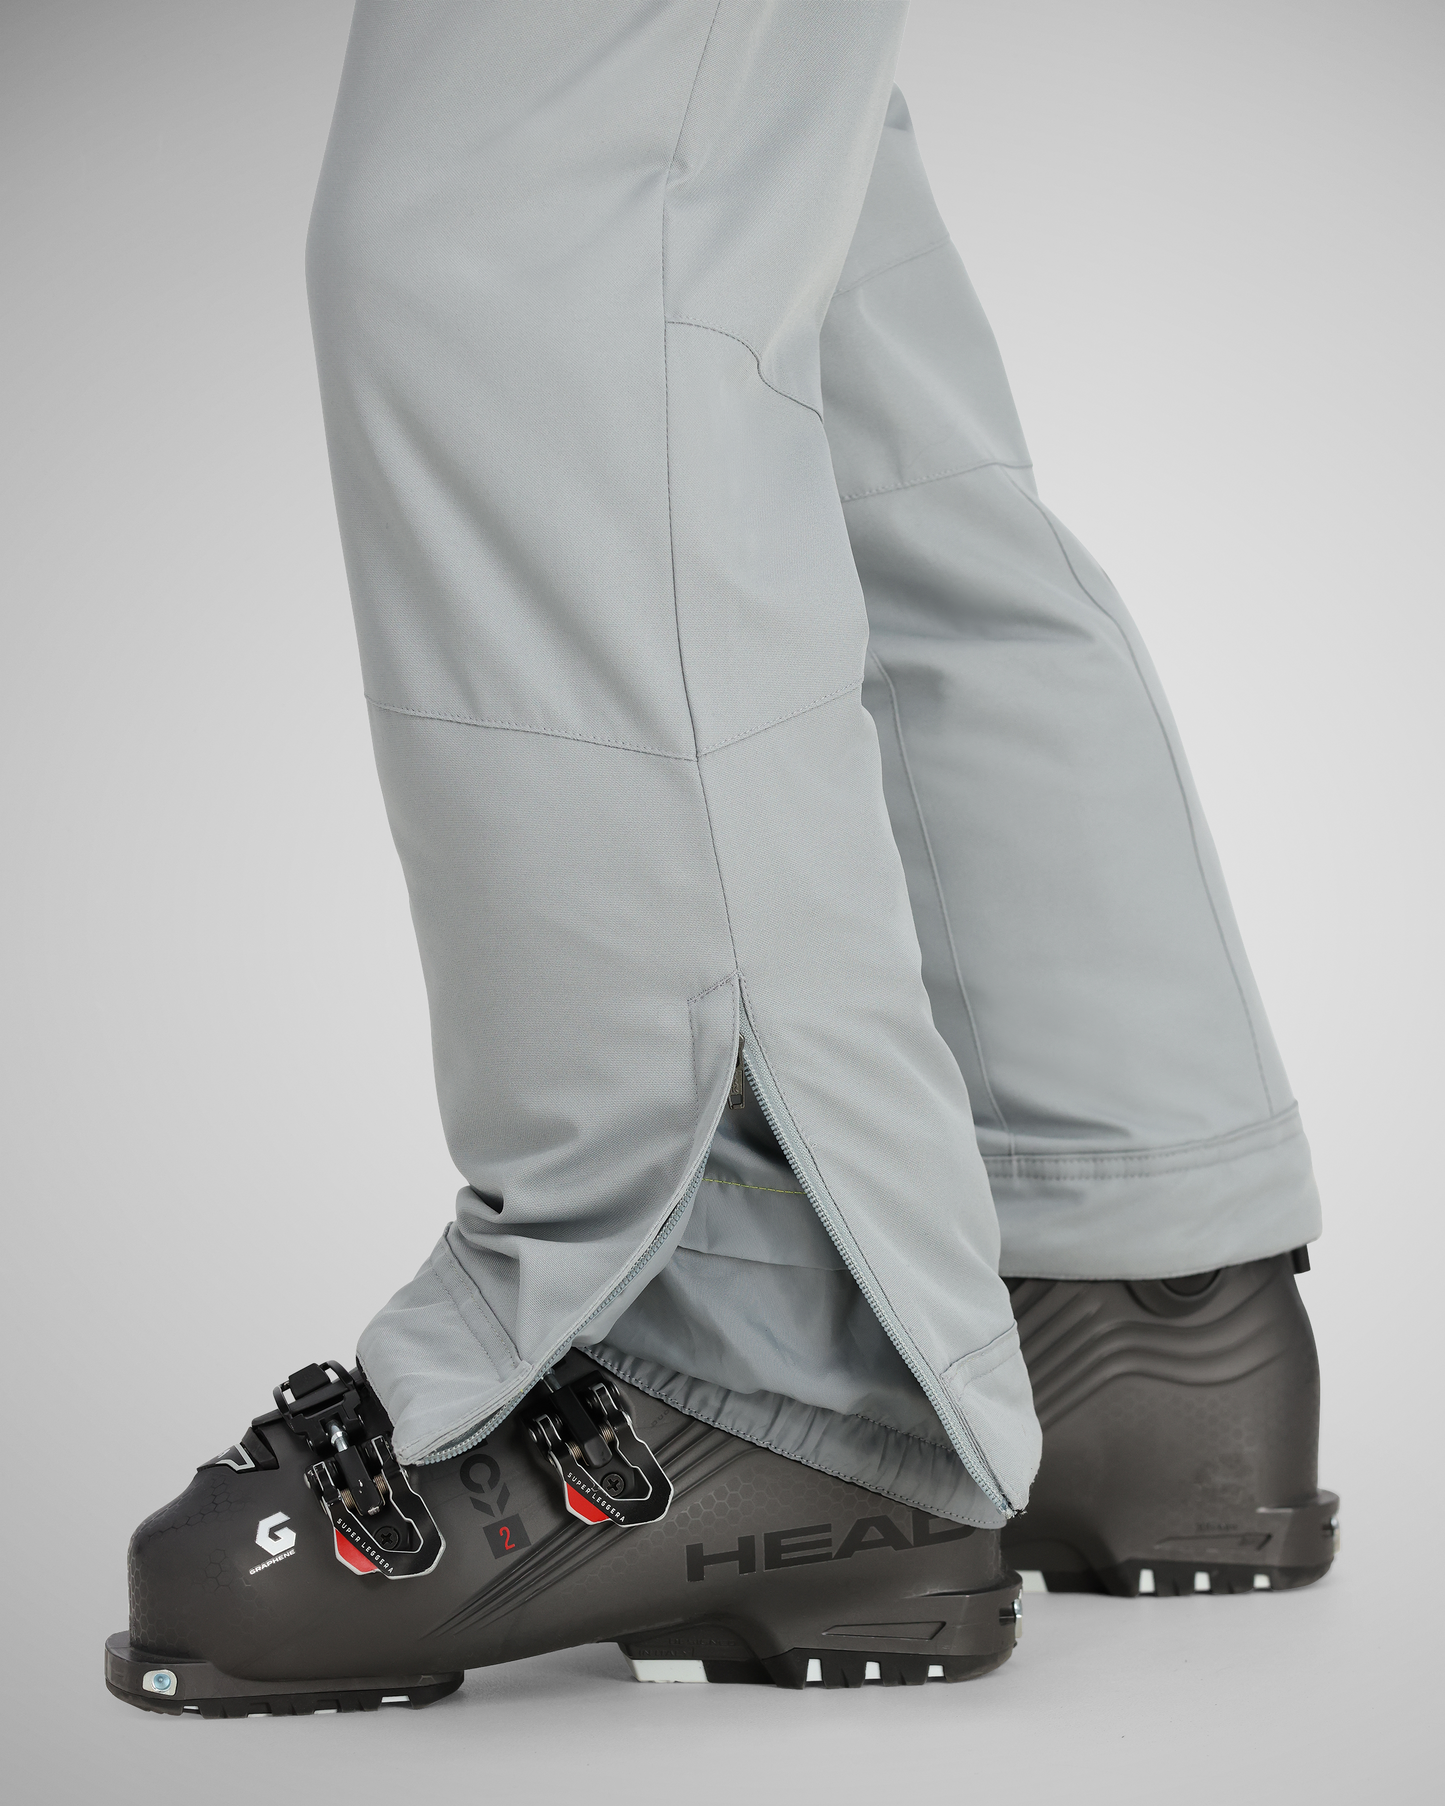 Zipper hem gussets | Best-in-class zippers provide immediate adjustment access when you need it.